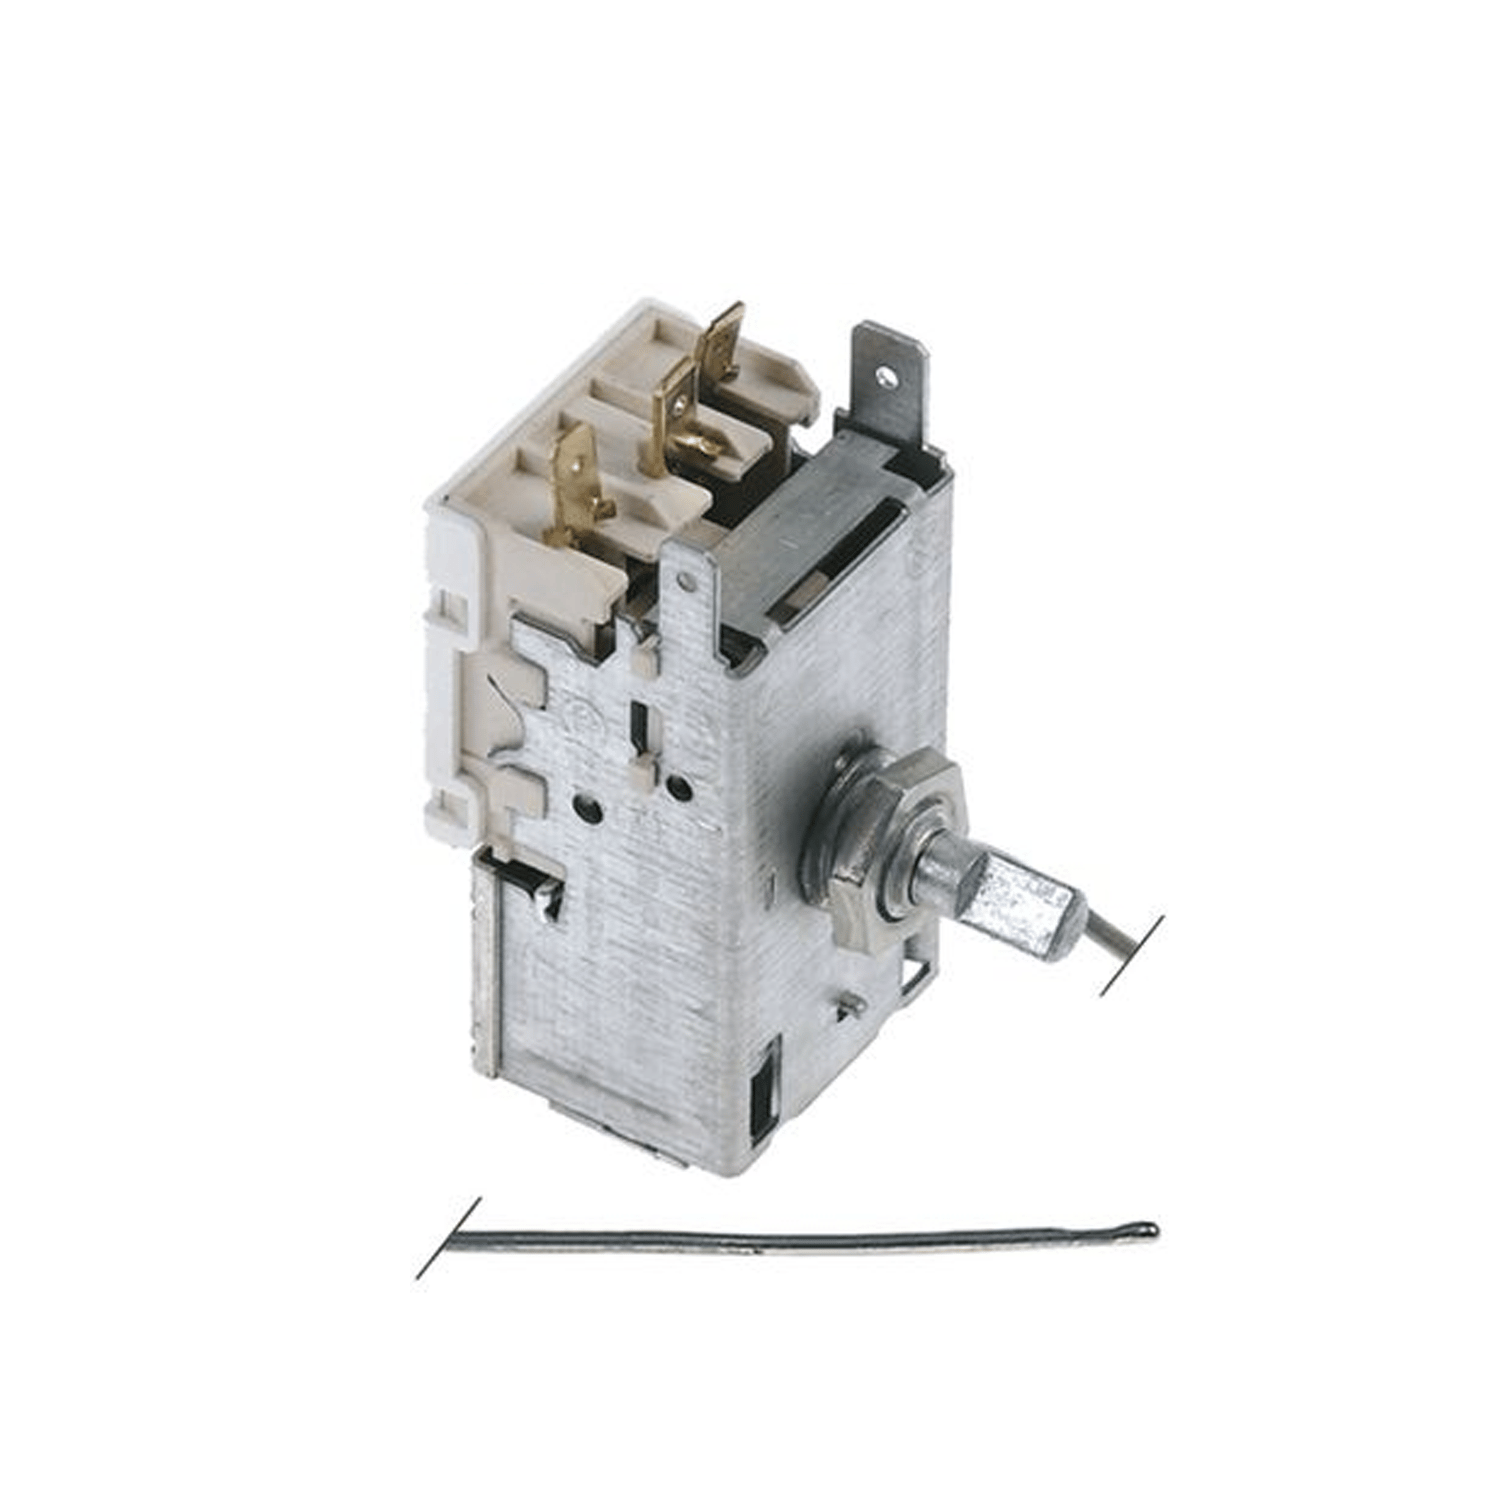 Thermostat RANCO K57-L2866 Probe ø 2mm Capillary tube 2000mm Temperature range -40 to + 40 ° C